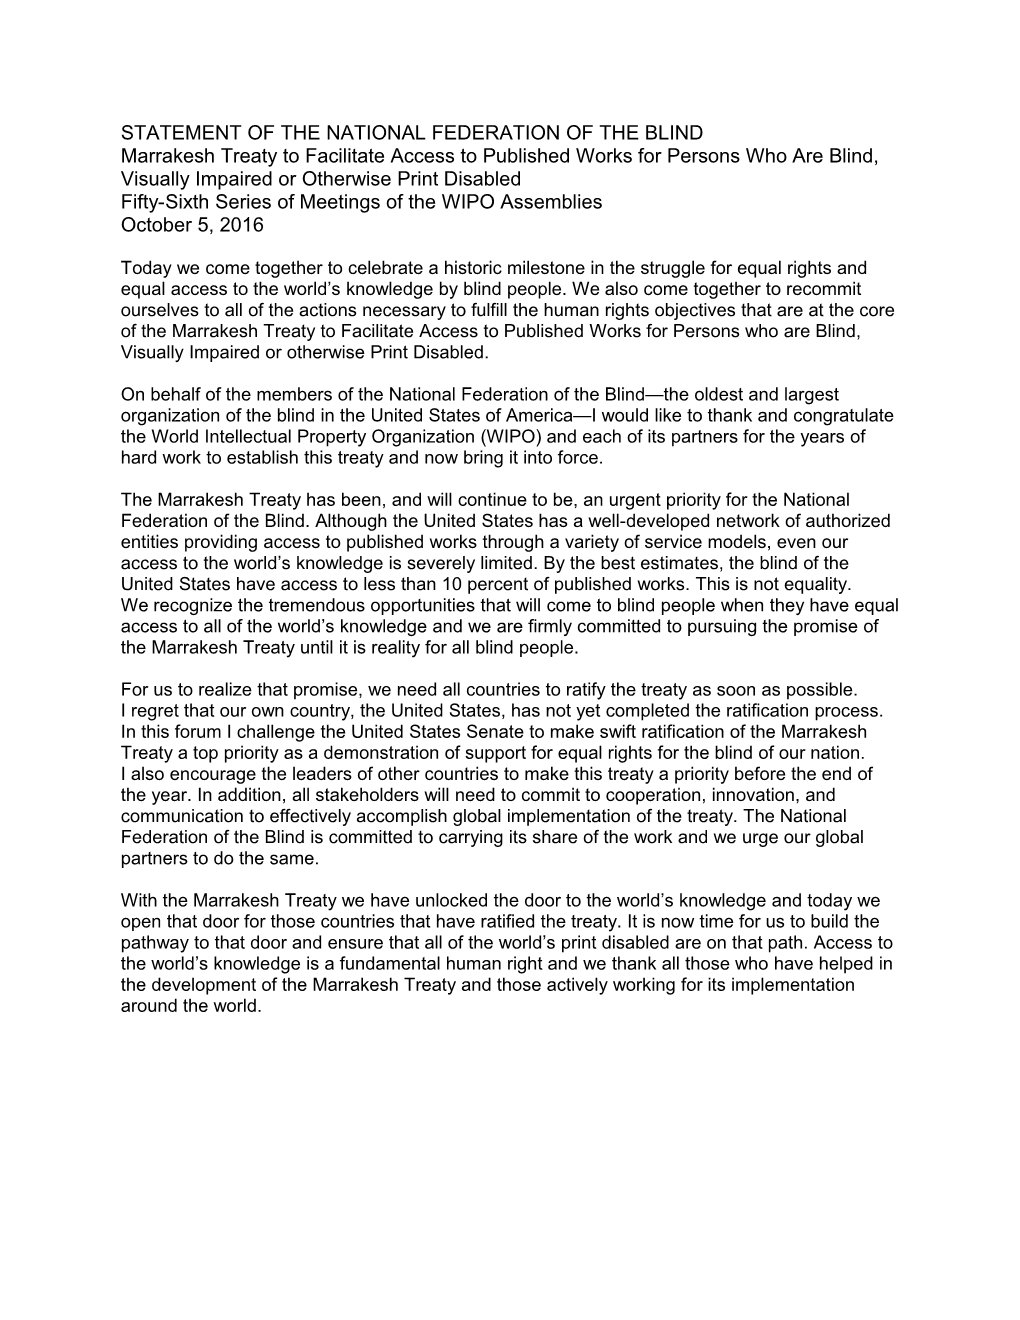 Marrakesh Assembly Statement - President of NFB, USA